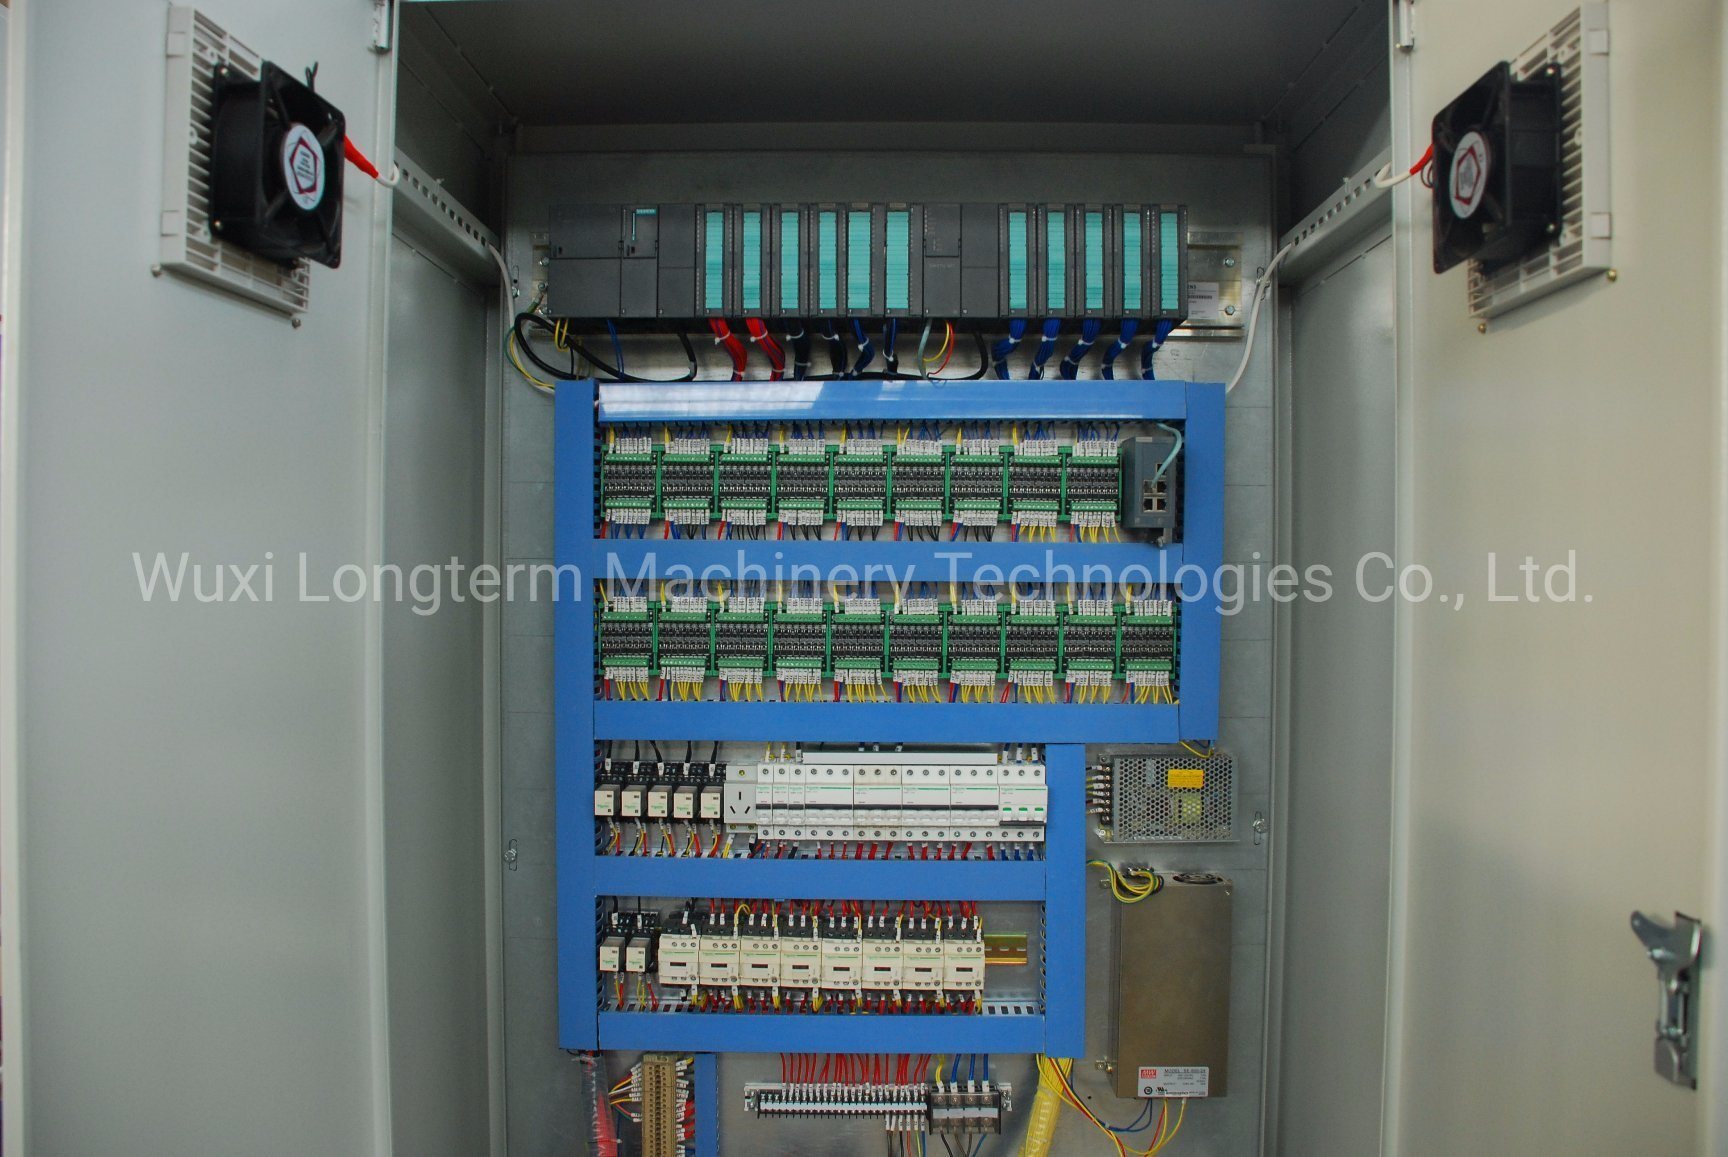 Automatic LPG Cylinder Hydrostatic Testing Machine / LPG Cylinder Production Line